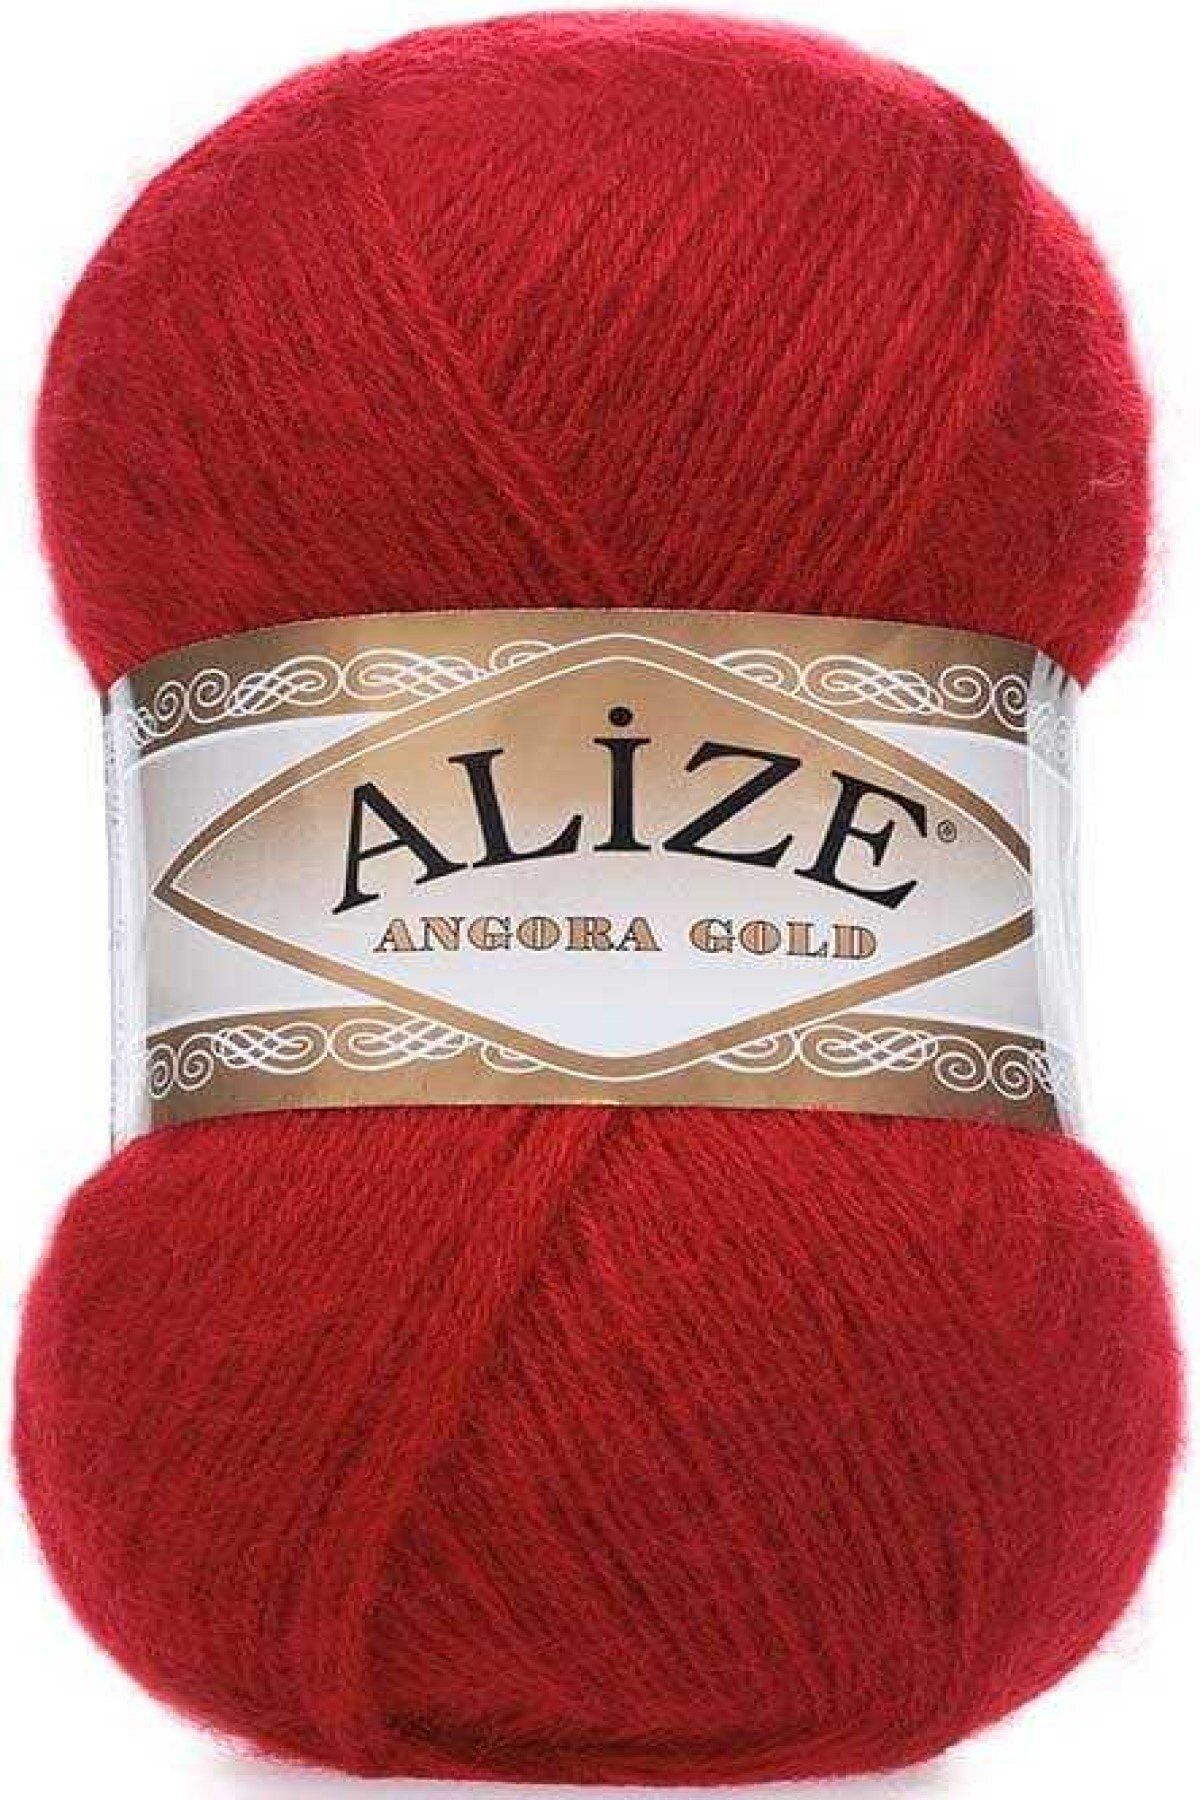 Alize Angora Gold El Örgü Ipi Ipliği Yünü Renk Kodu:106 (kırmızı)